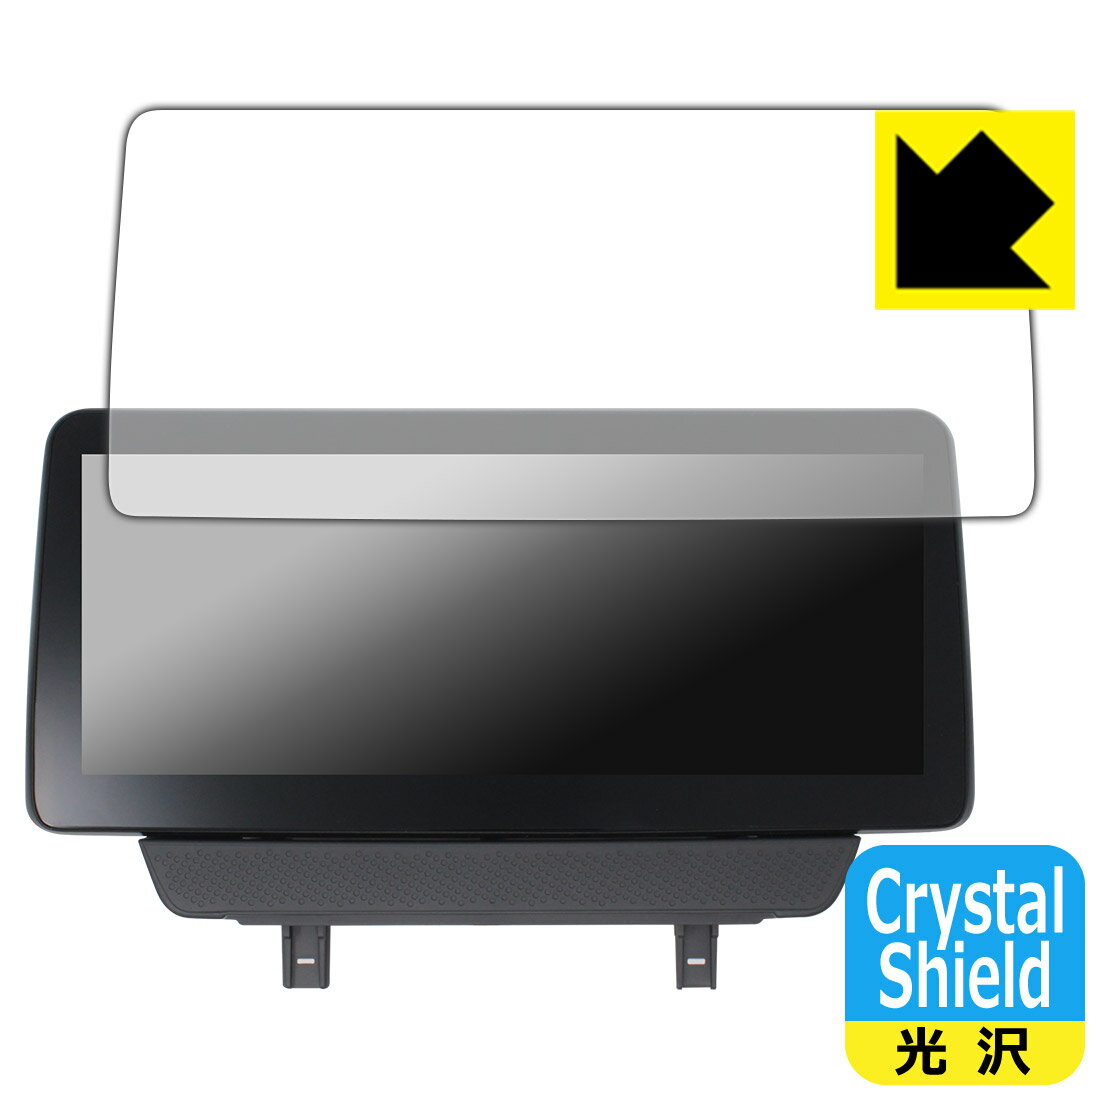 Crystal ShieldyzیtB ACE MAZDA ND5RC 10.25C`fBXvCI[fBI (}c_ [hX^[p) { А